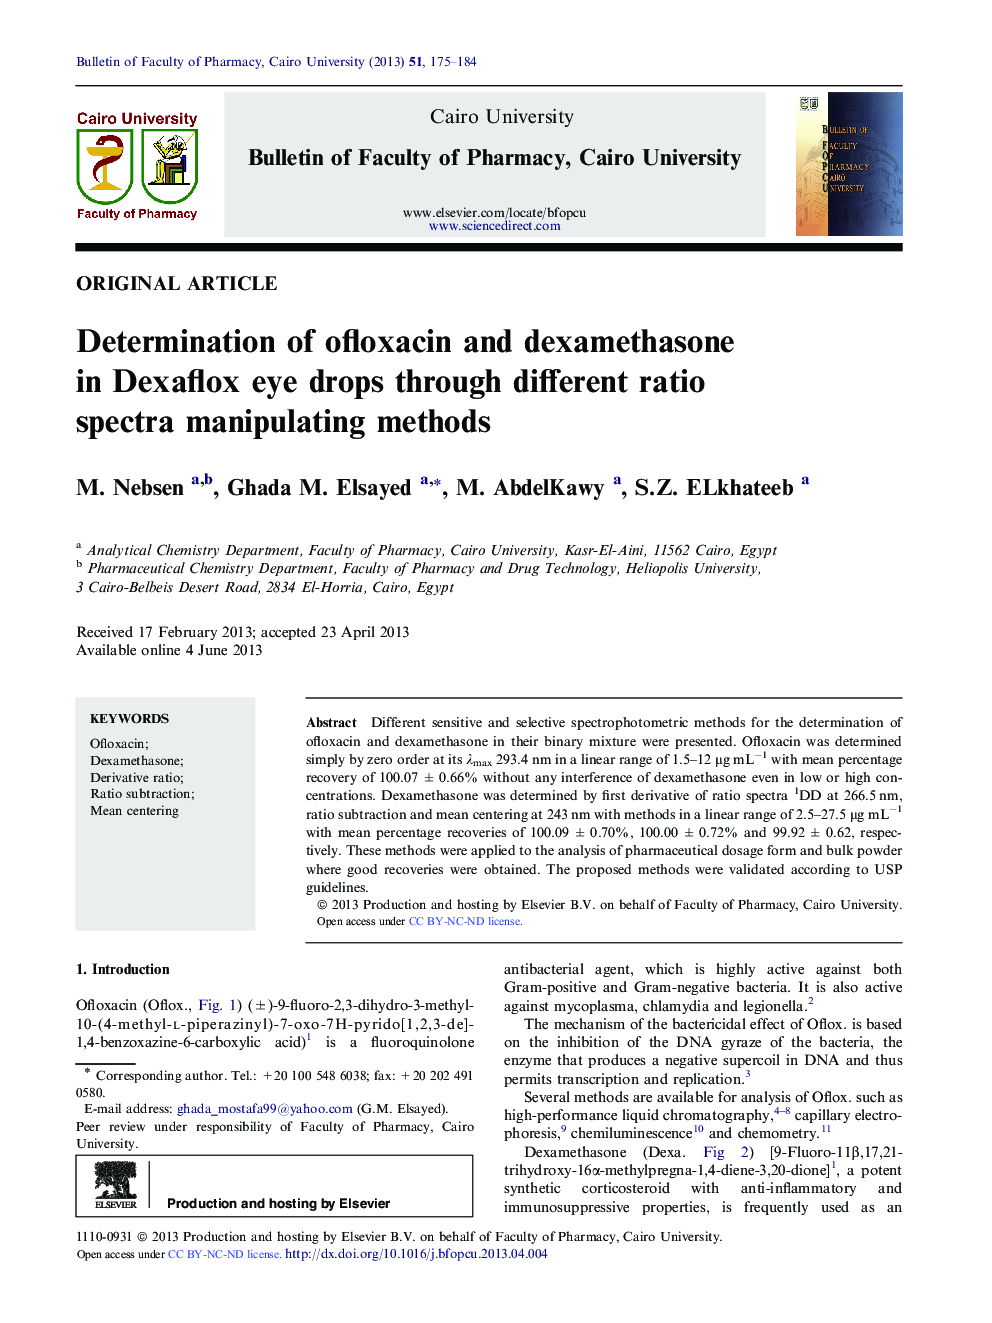 Determination of ofloxacin and dexamethasone in Dexaflox eye drops through different ratio spectra manipulating methods 